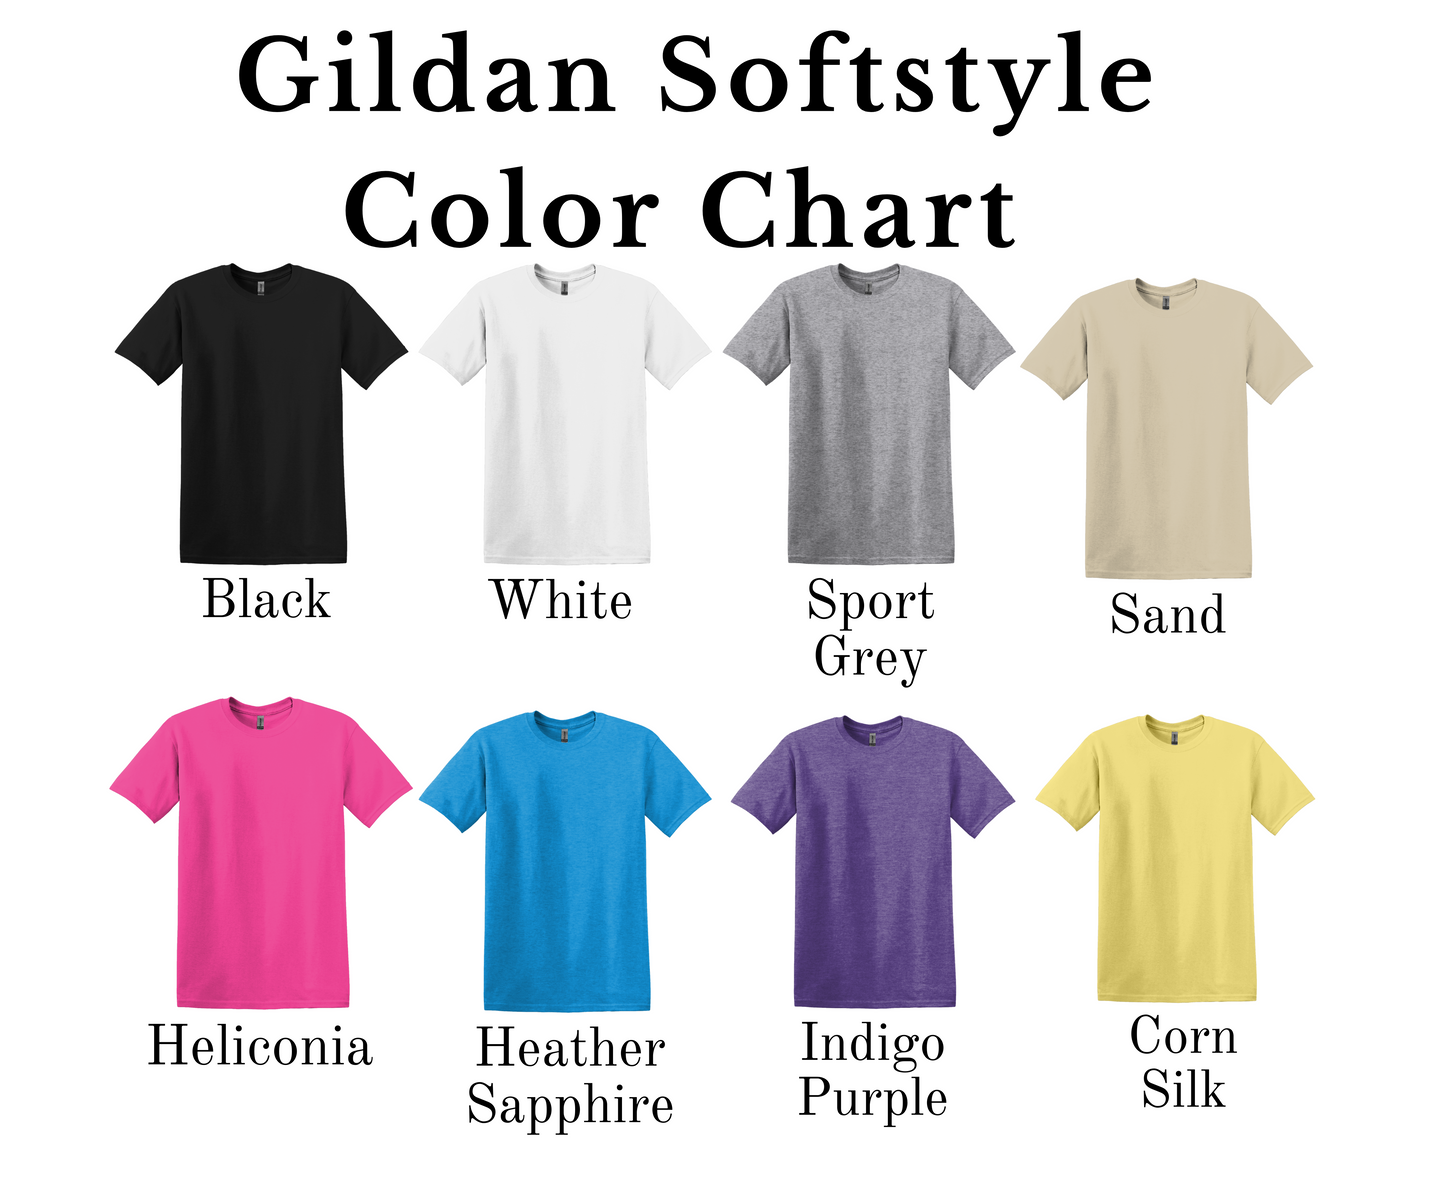 Pray Big Worry Small Gildan Softstyle T-shirt